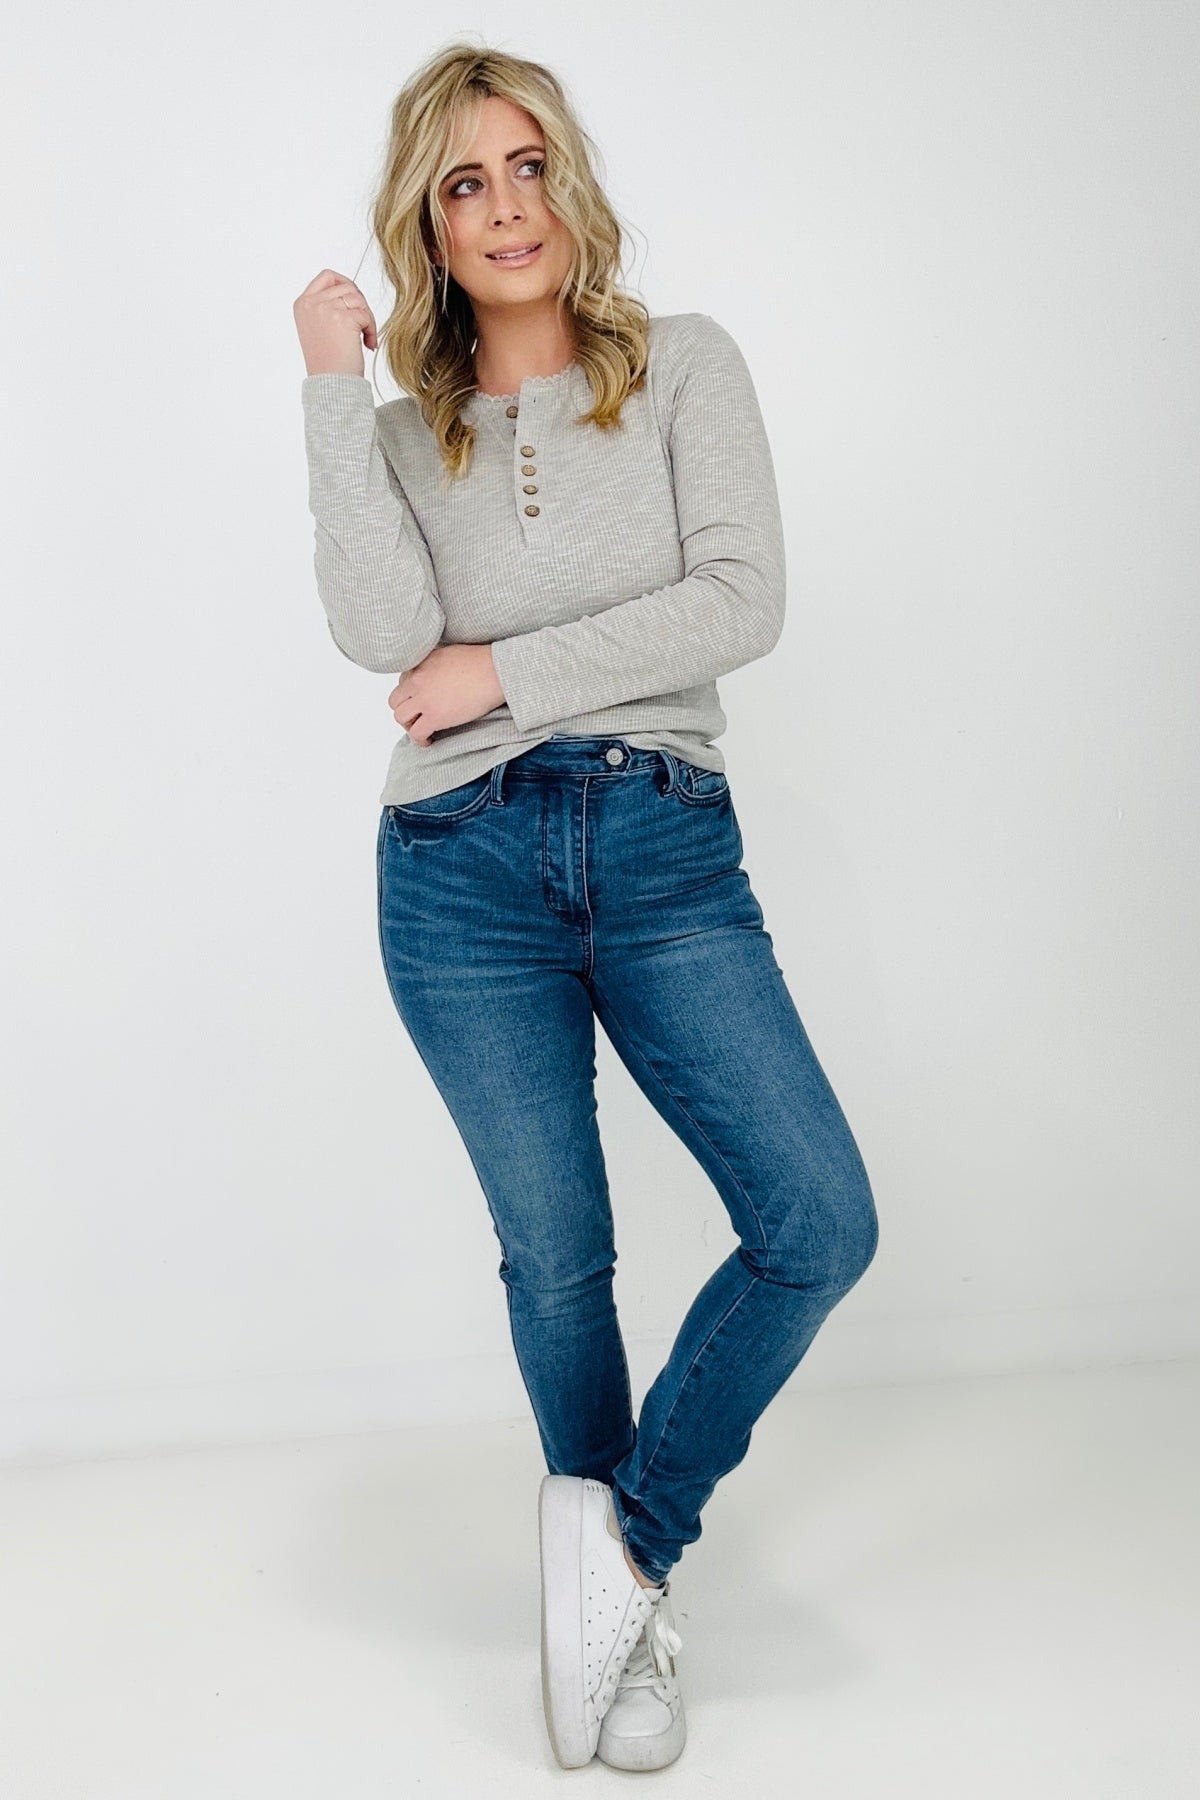 "Cora" Judy Blue High Waist Control Top Cool Denim Skinny Jeans